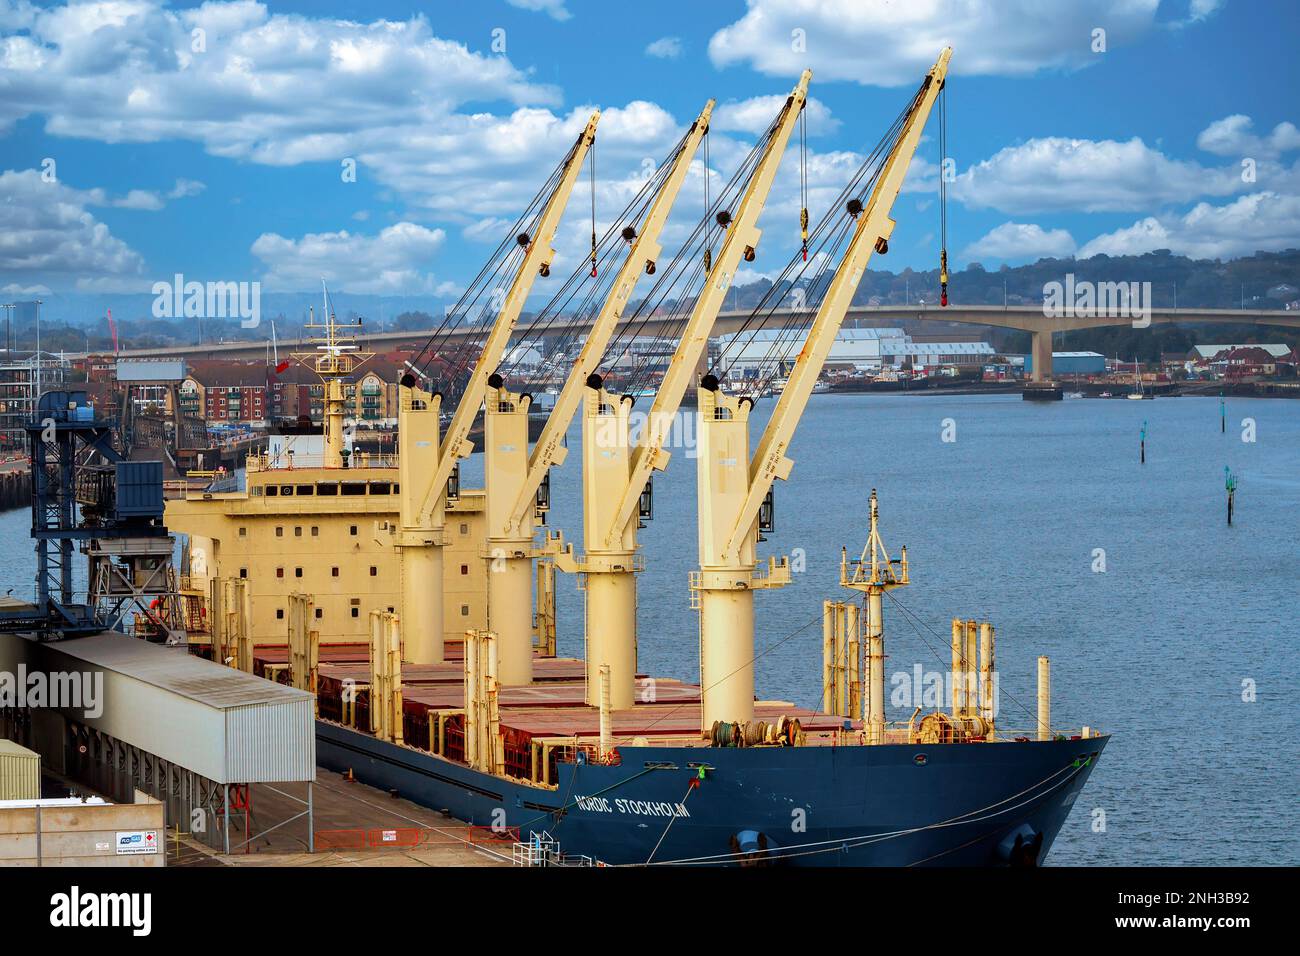 Schiff Nordic Stockholm hat in Southampton UK angedockt Stockfoto